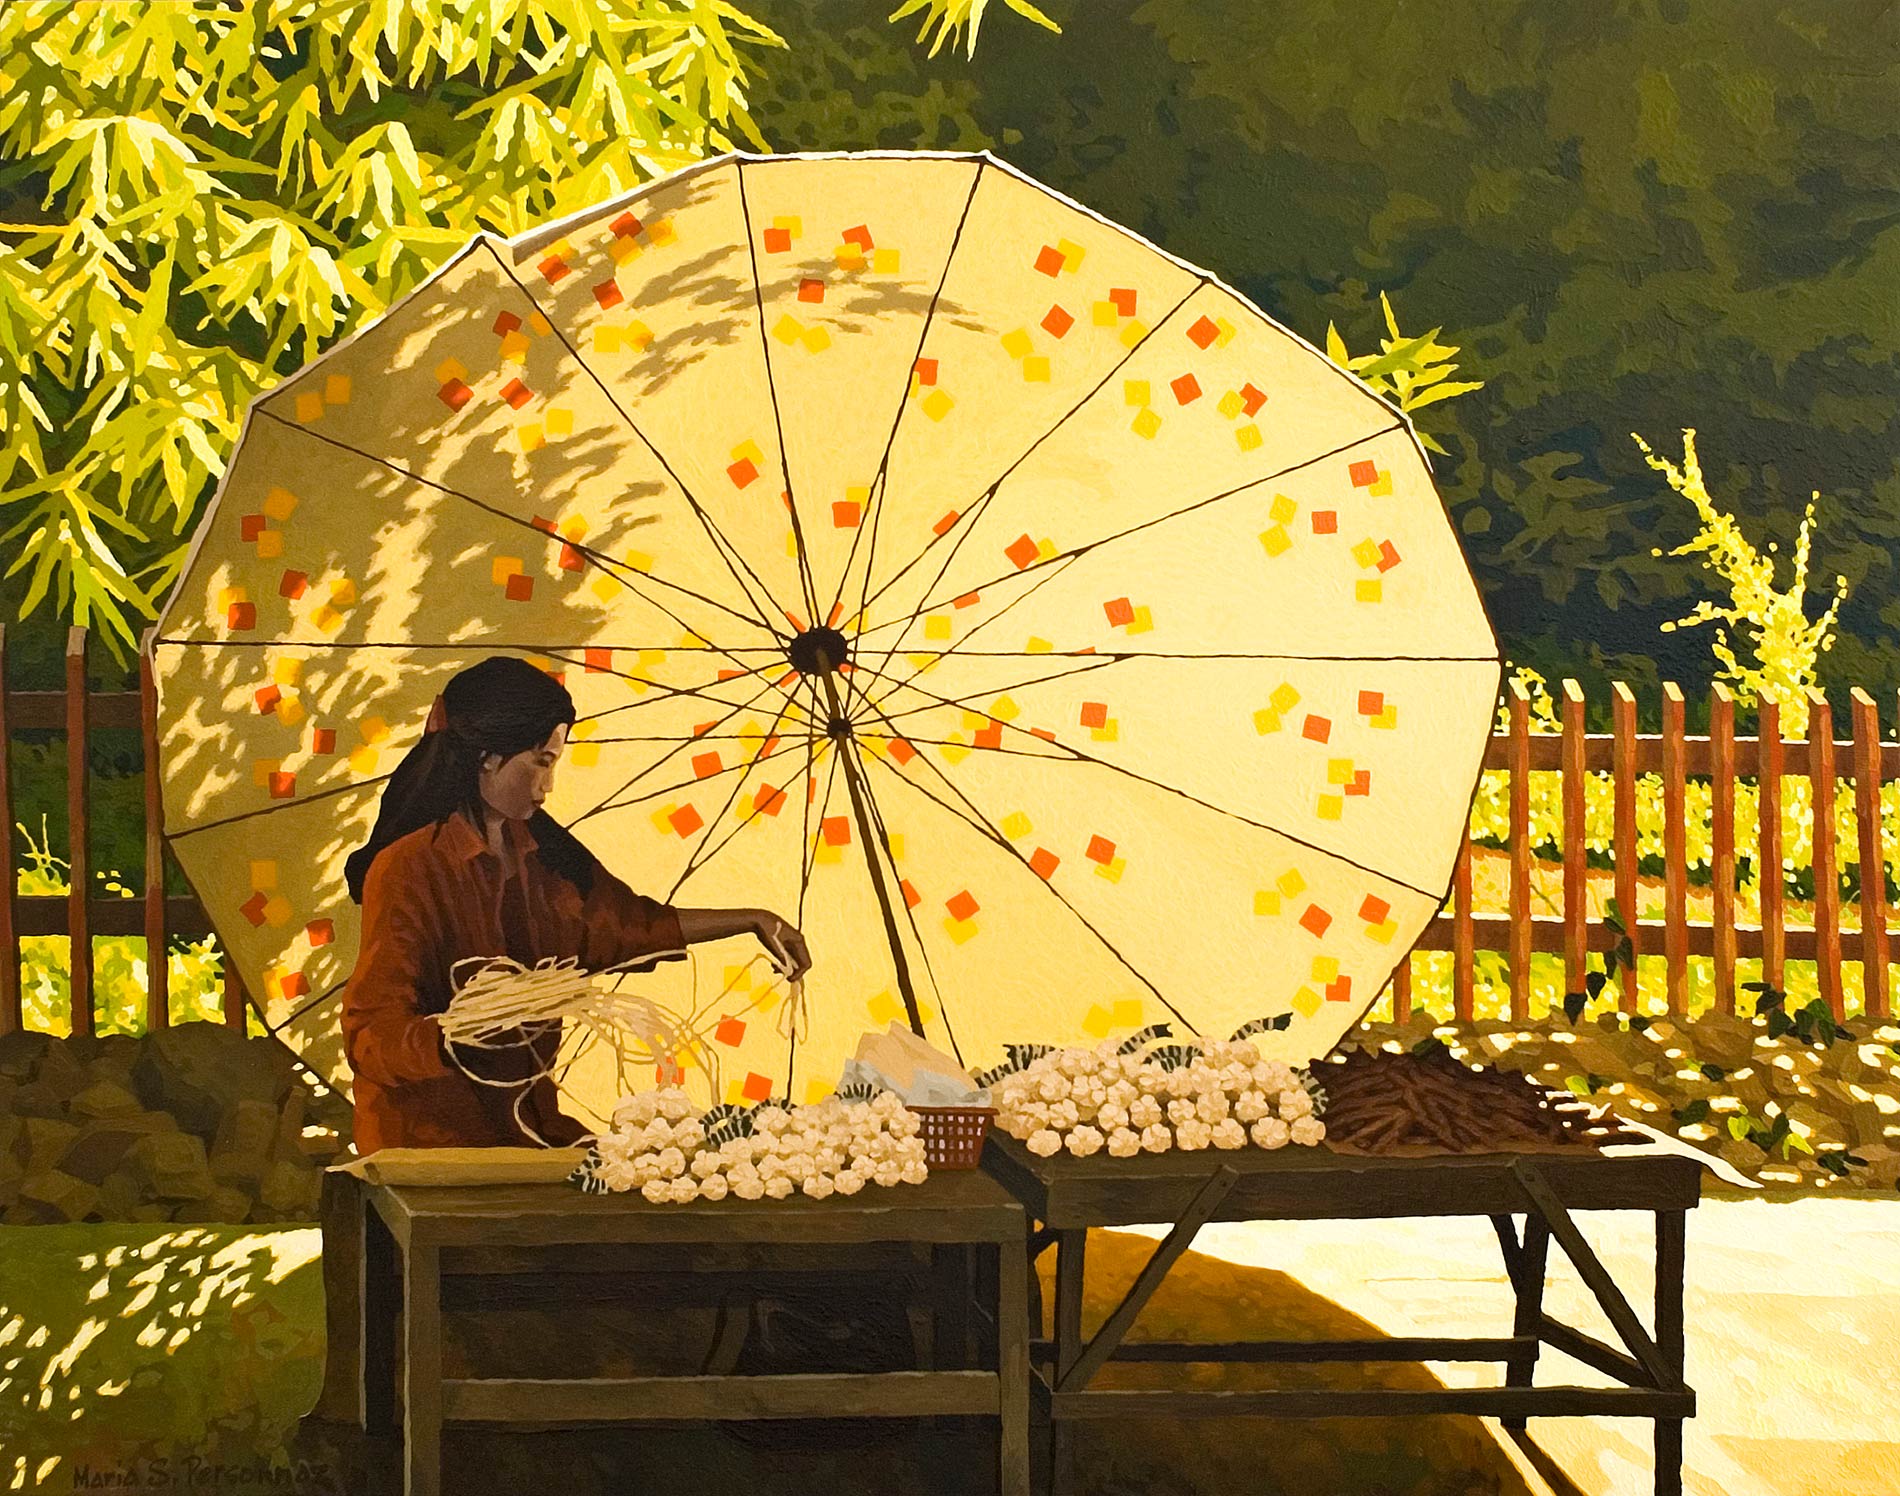 Marchande et son parasol à motifs, Vientiane